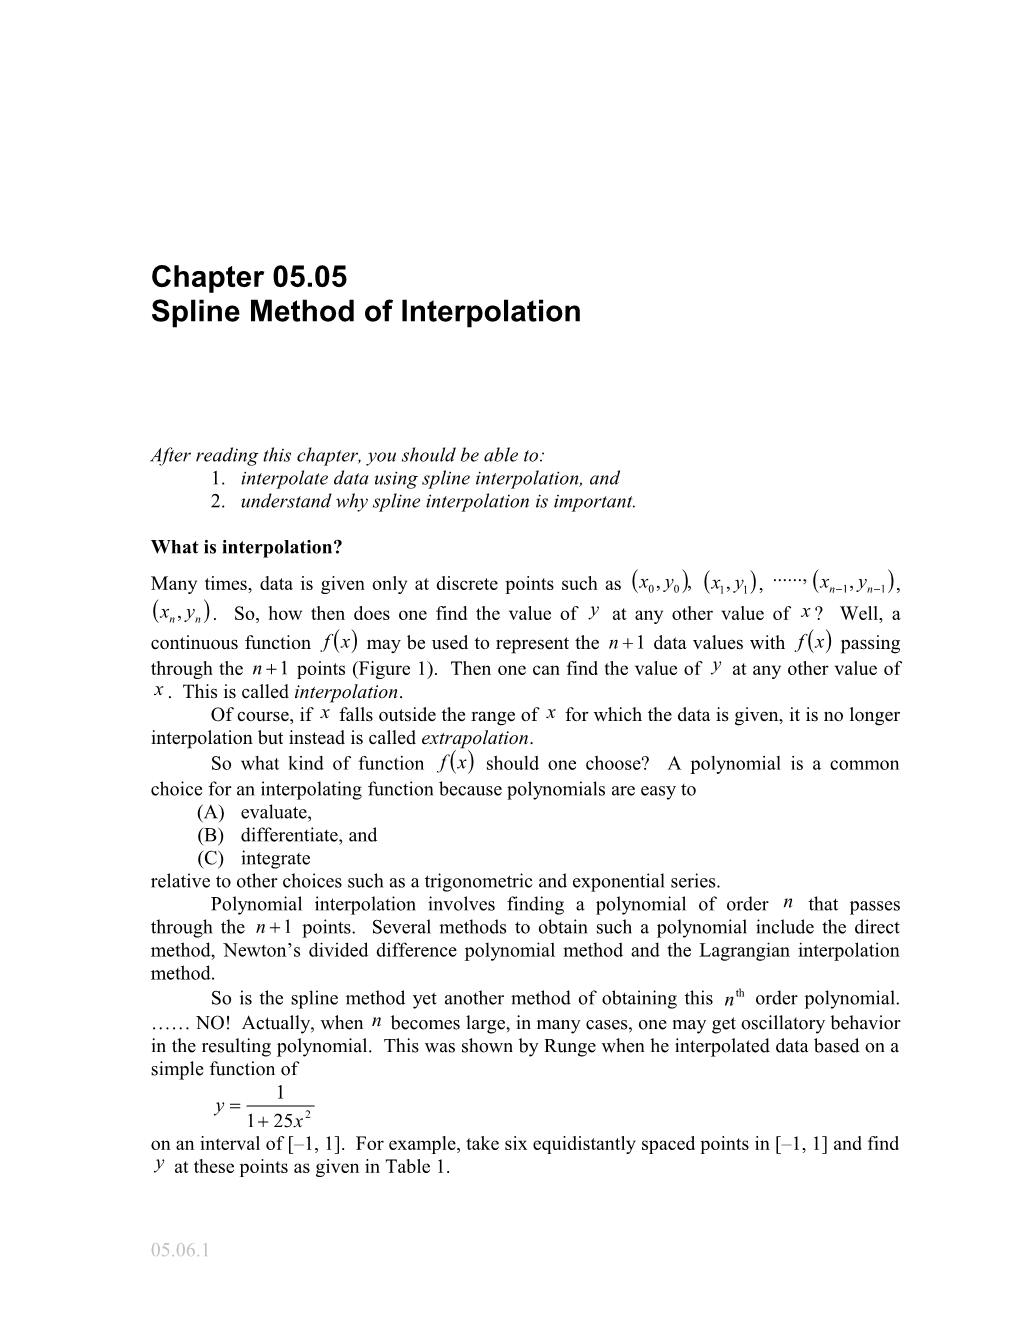 Spline Method of Interpolation: General Engineering